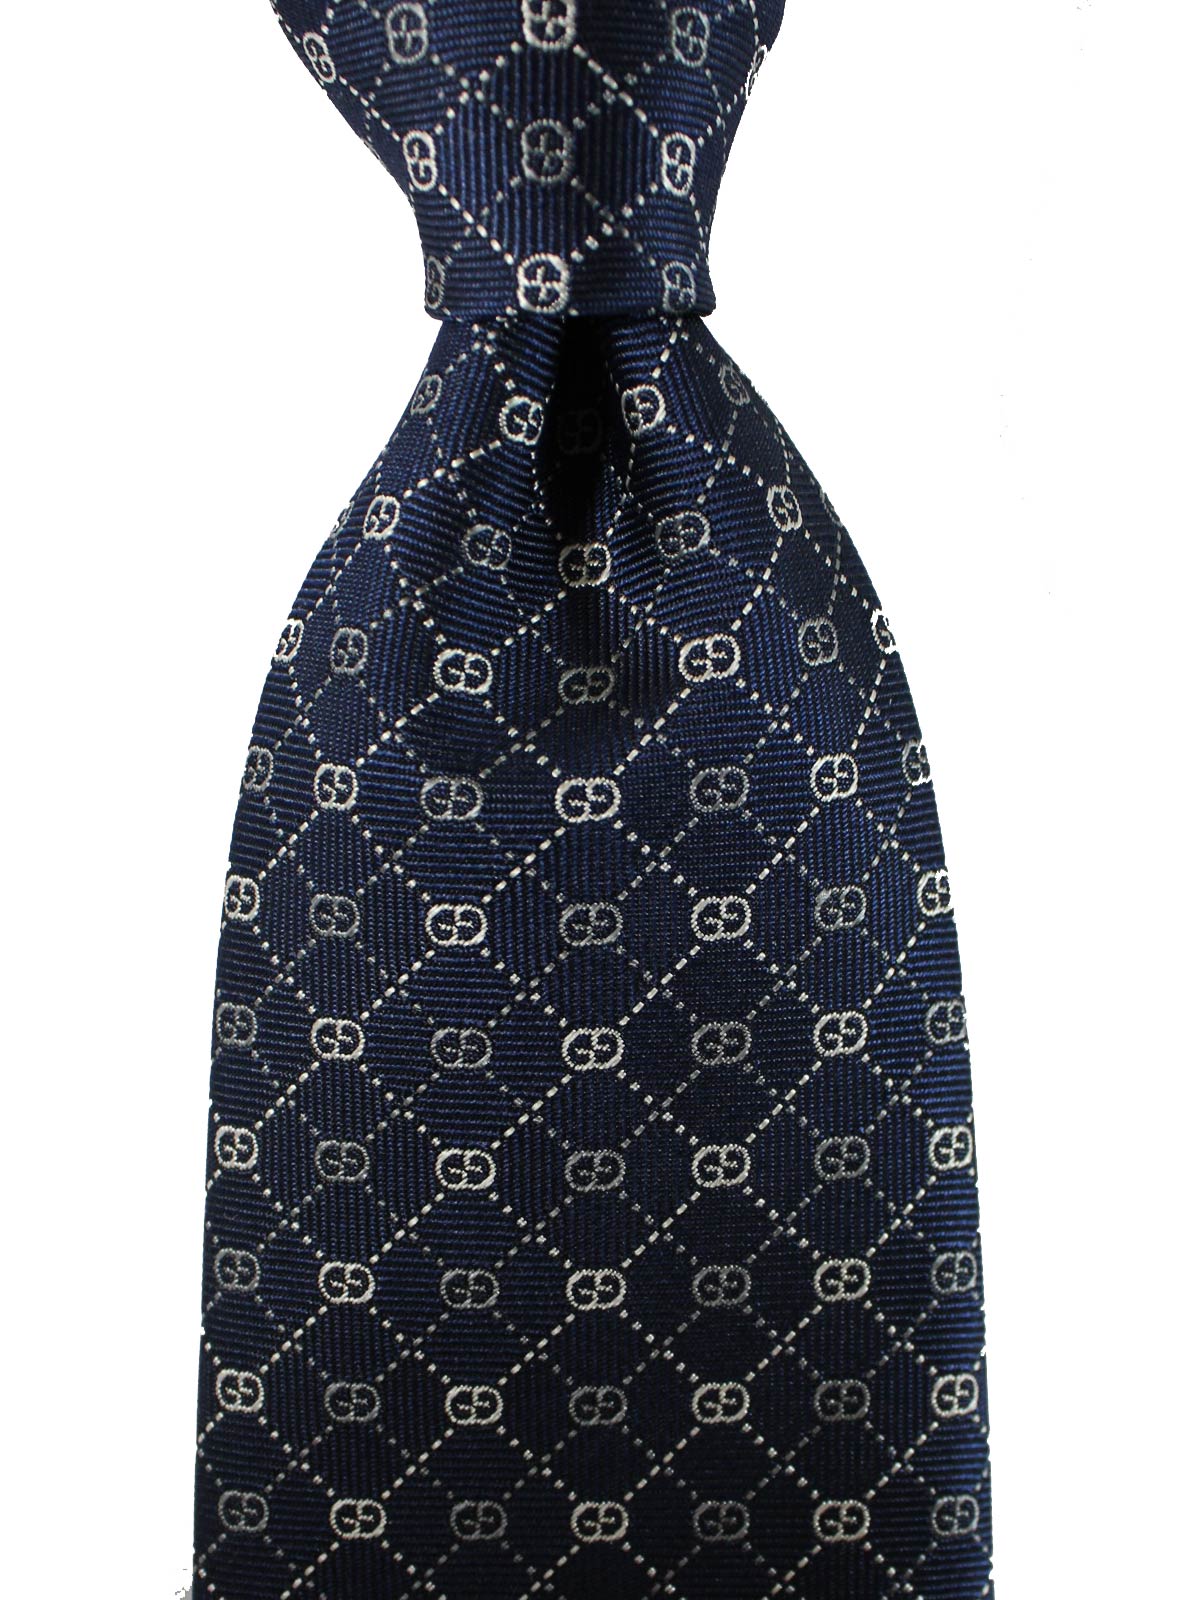 Gucci GG Tie | Gucci Sale | Men Collection - Tie Deals